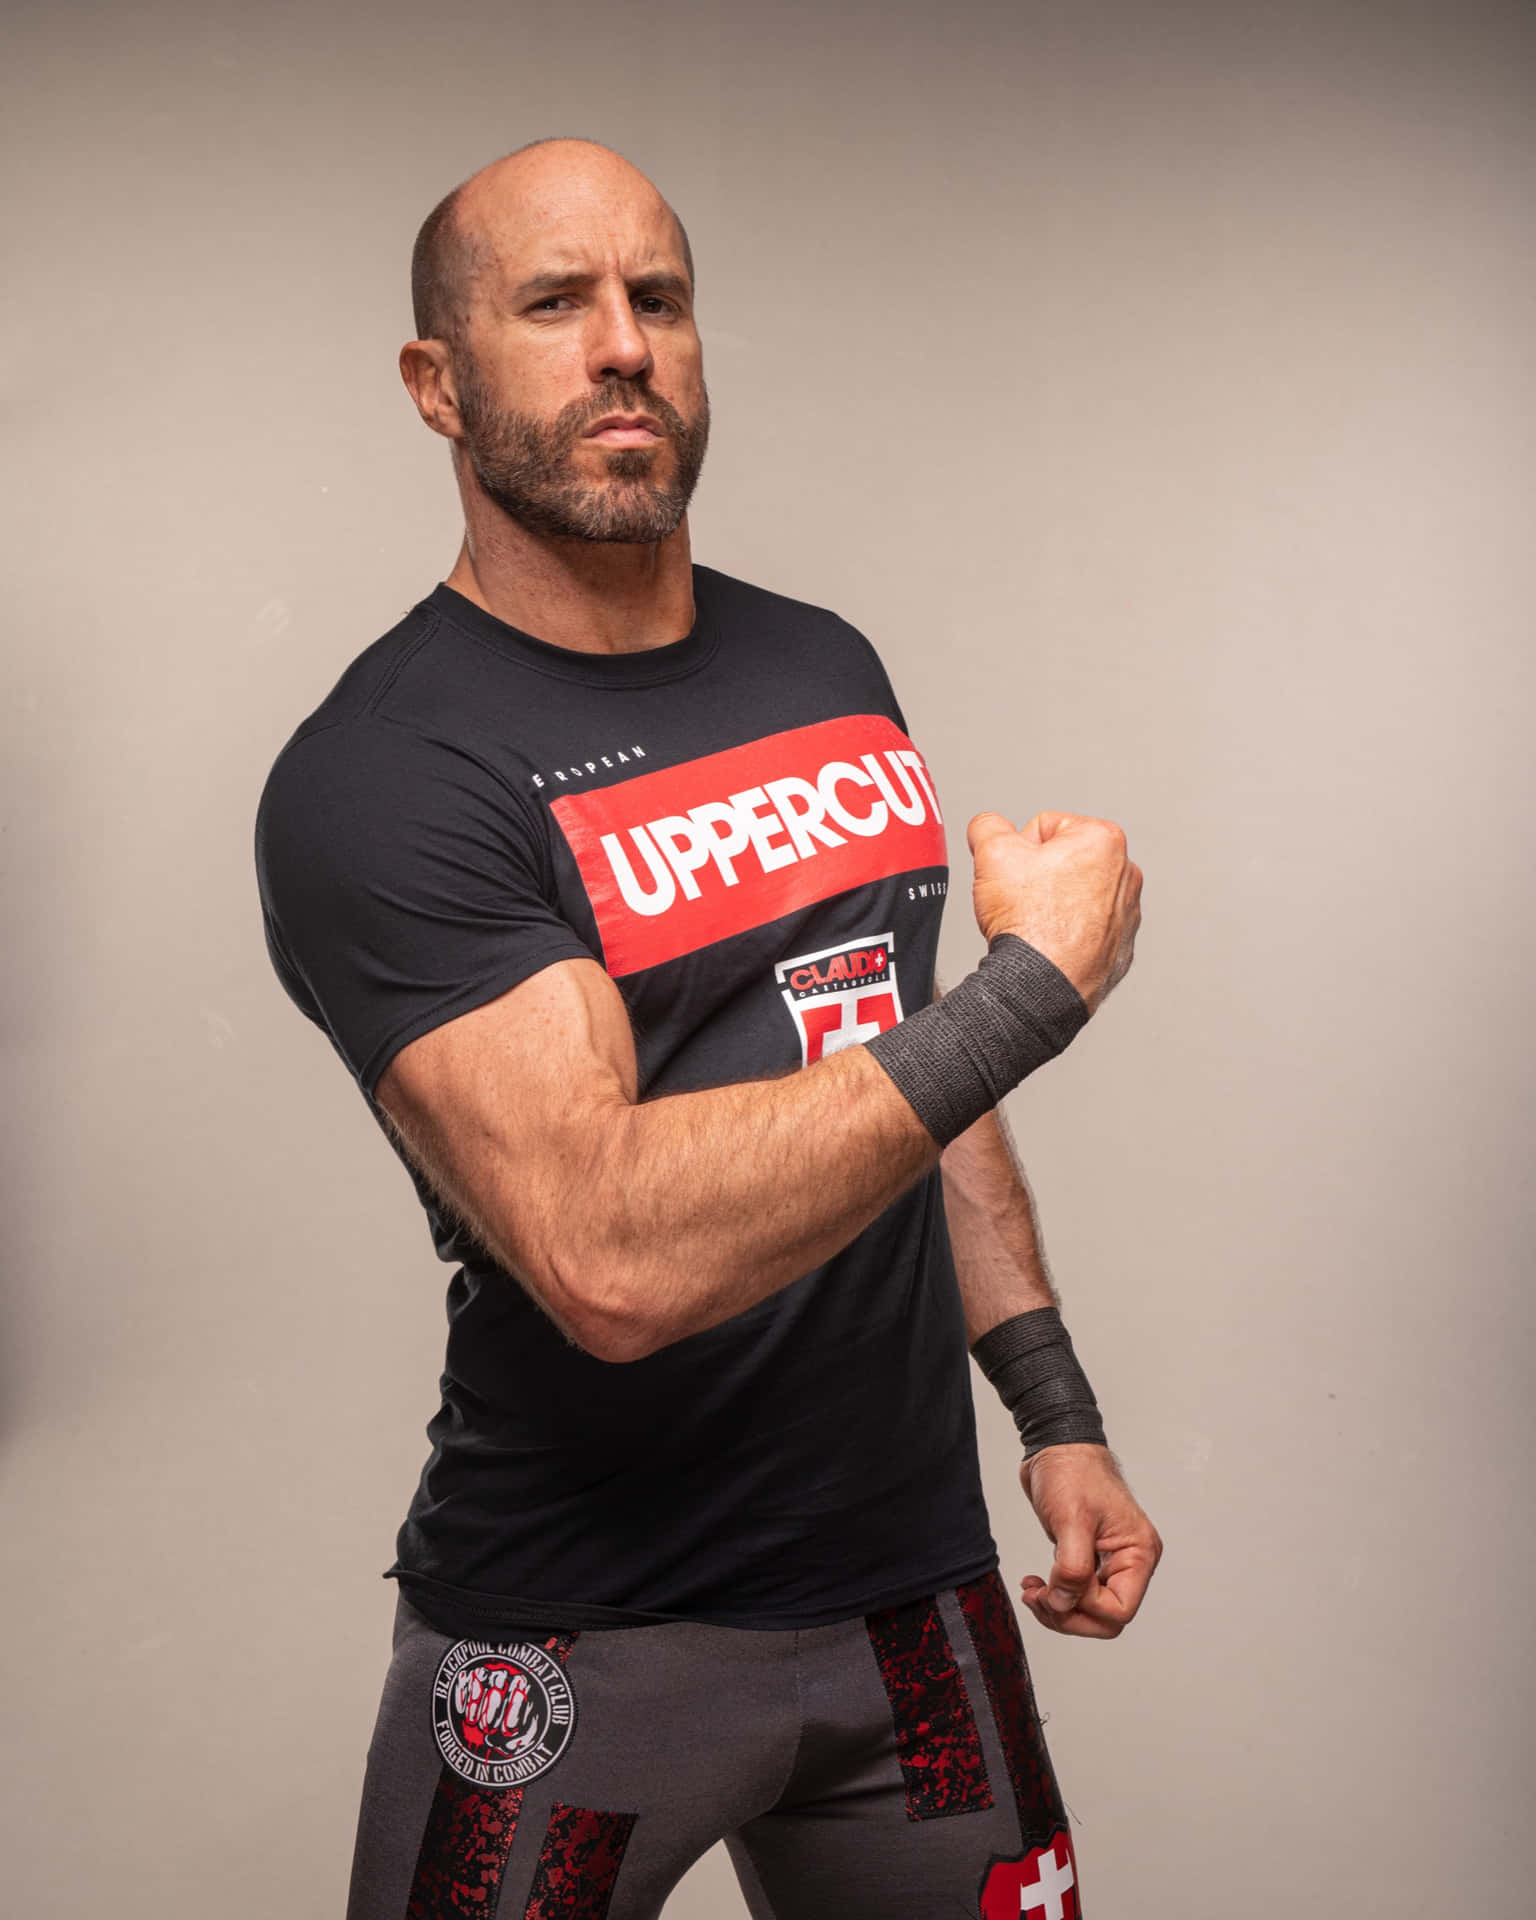 Schweizisk professionel wrestler Claudio Castagnoli sort øvre kast skjorte Wallpaper